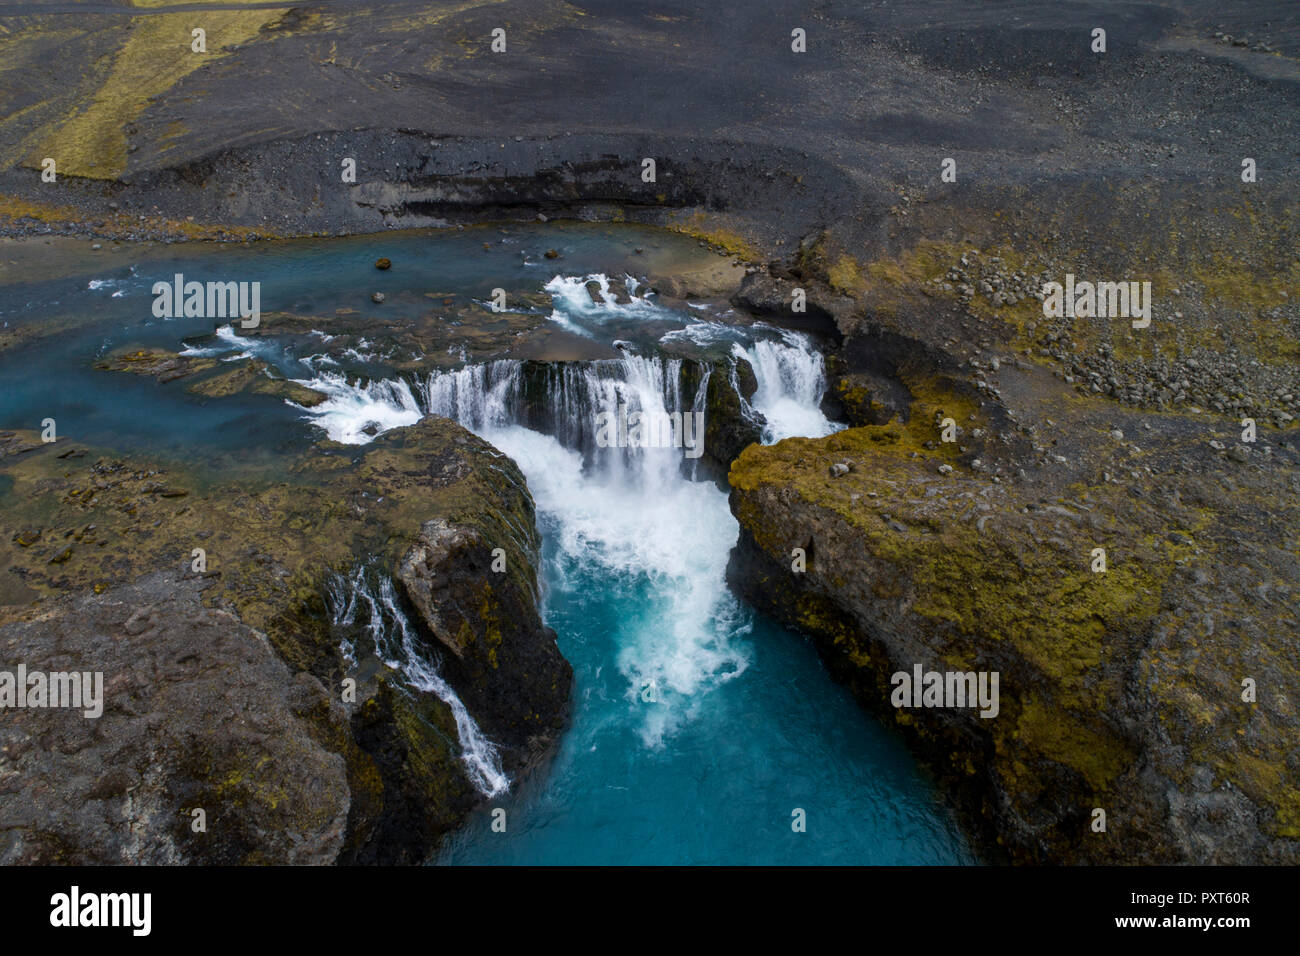 Sigoldufoss waterfall in volcanic landscape, Suðurland, Iceland Stock Photo